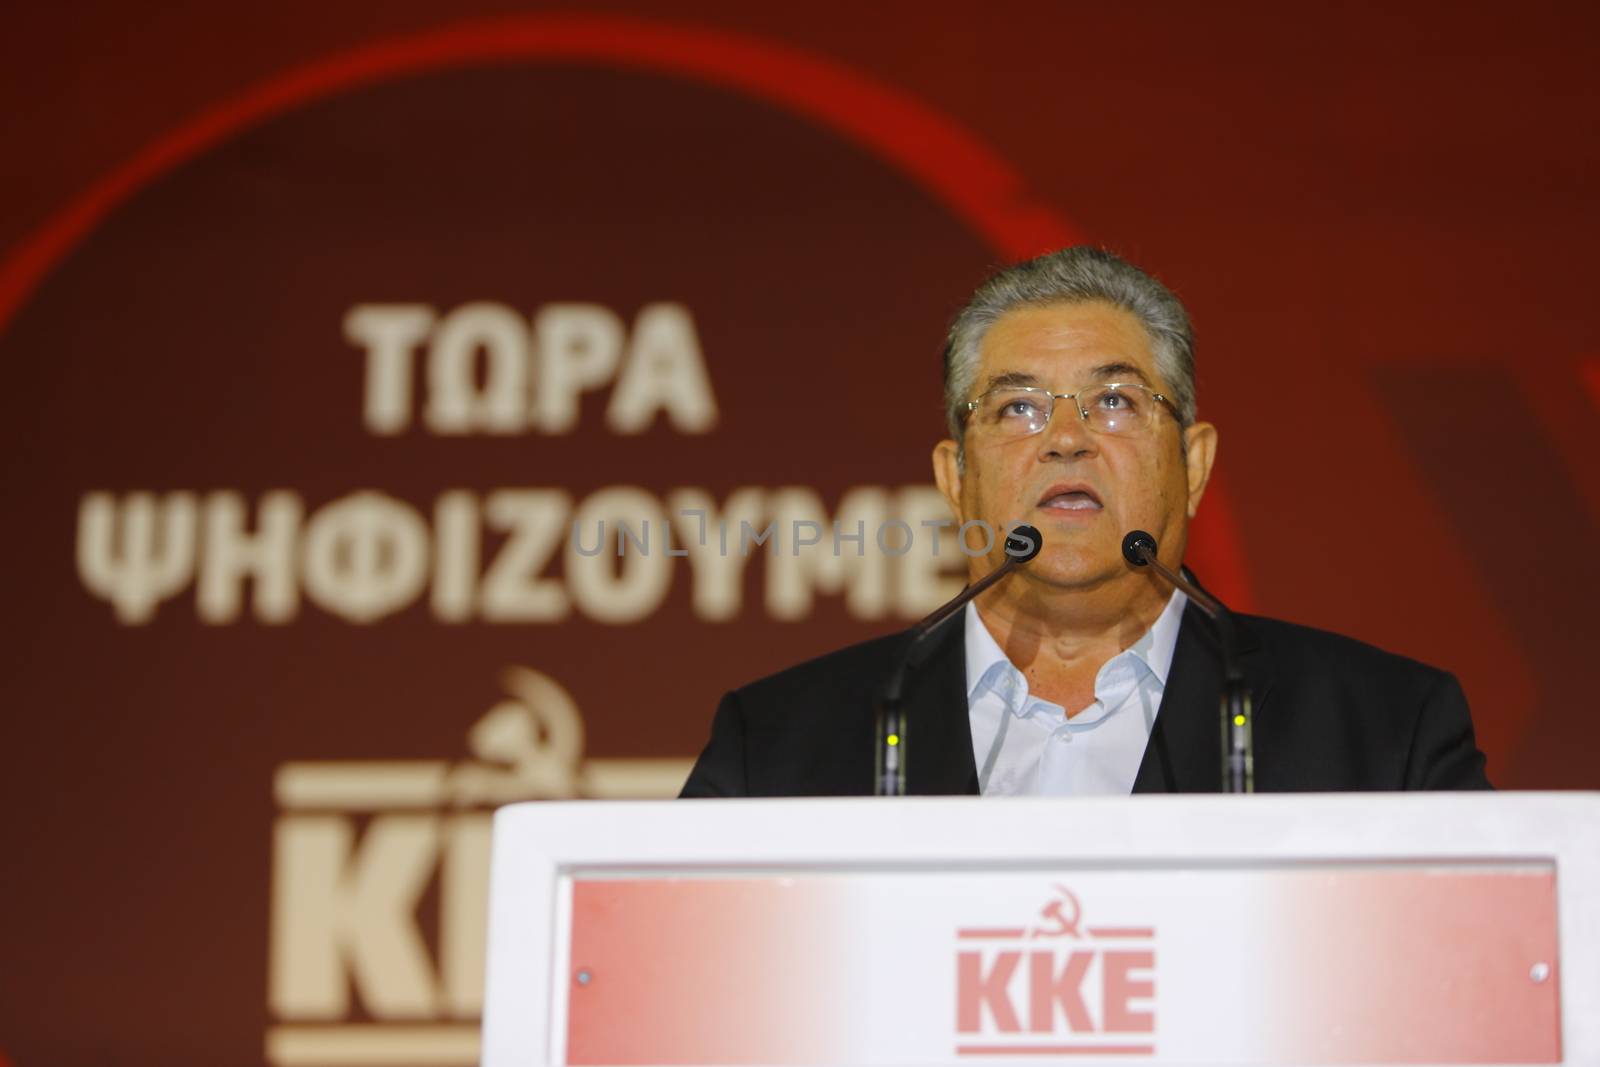 GREECE - POLITICS - ATHENS COMMUNIST ELECTION RALLY by newzulu